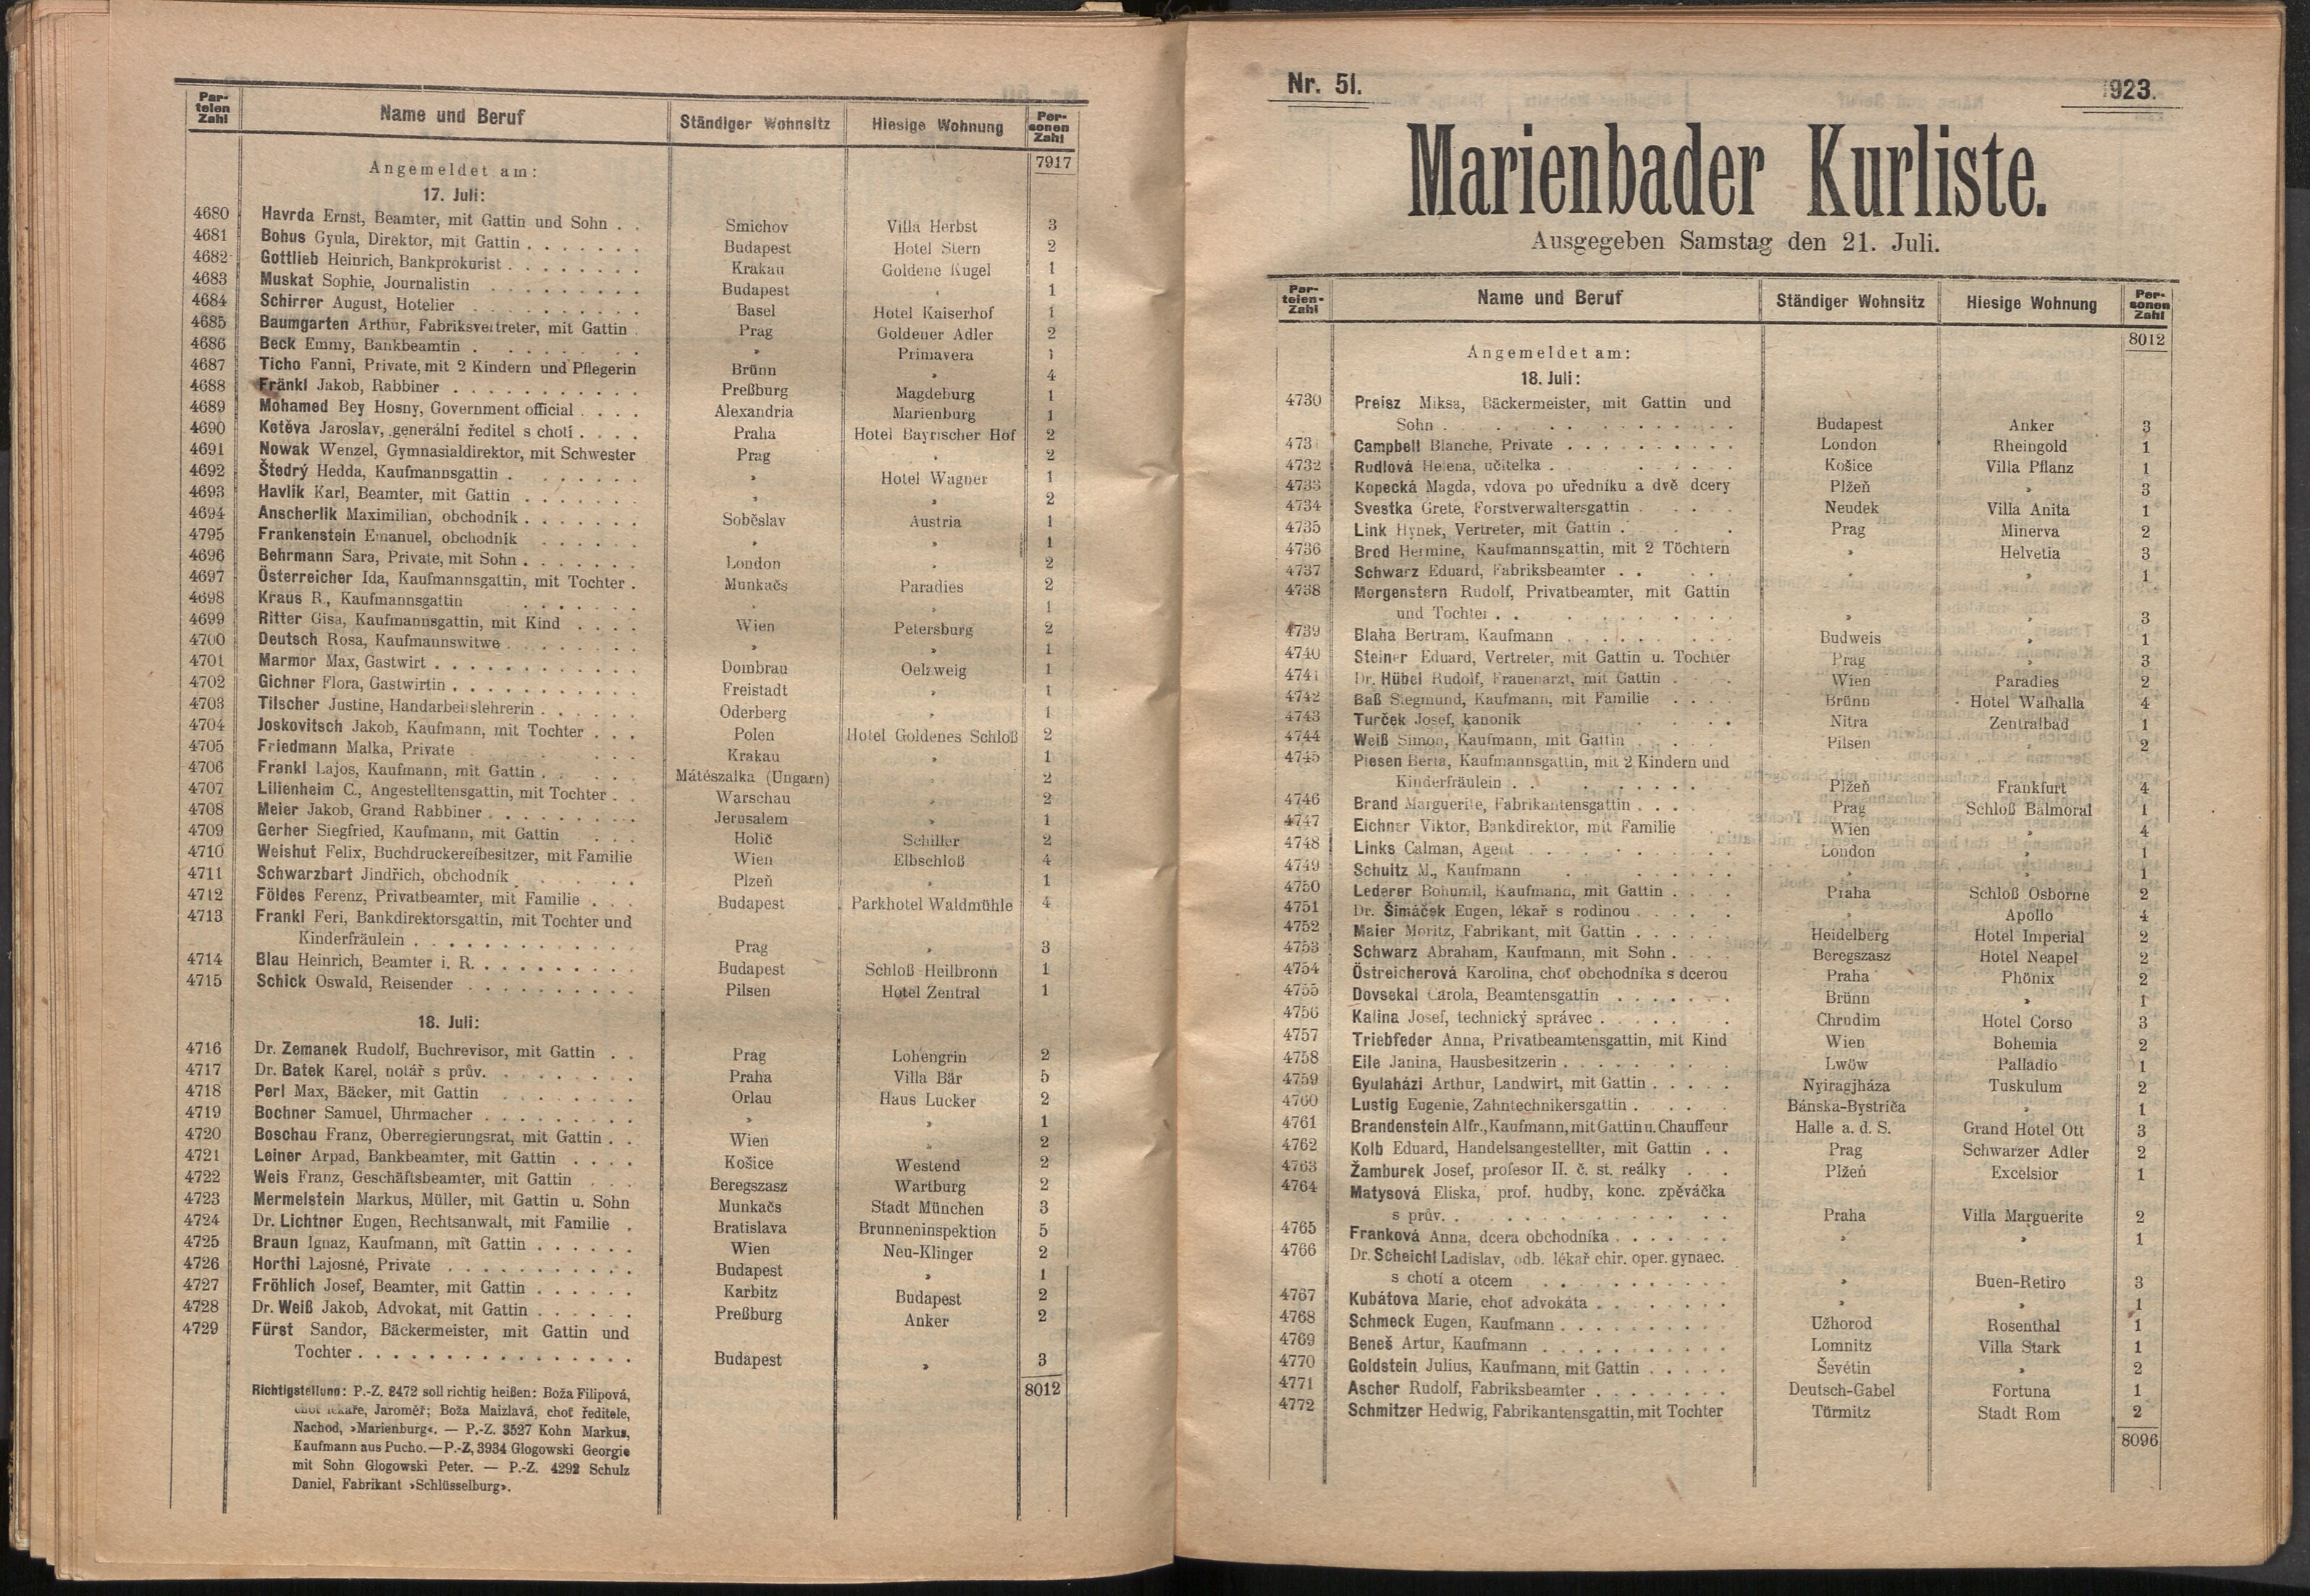 91. soap-ch_knihovna_marienbader-kurliste-1923_0910